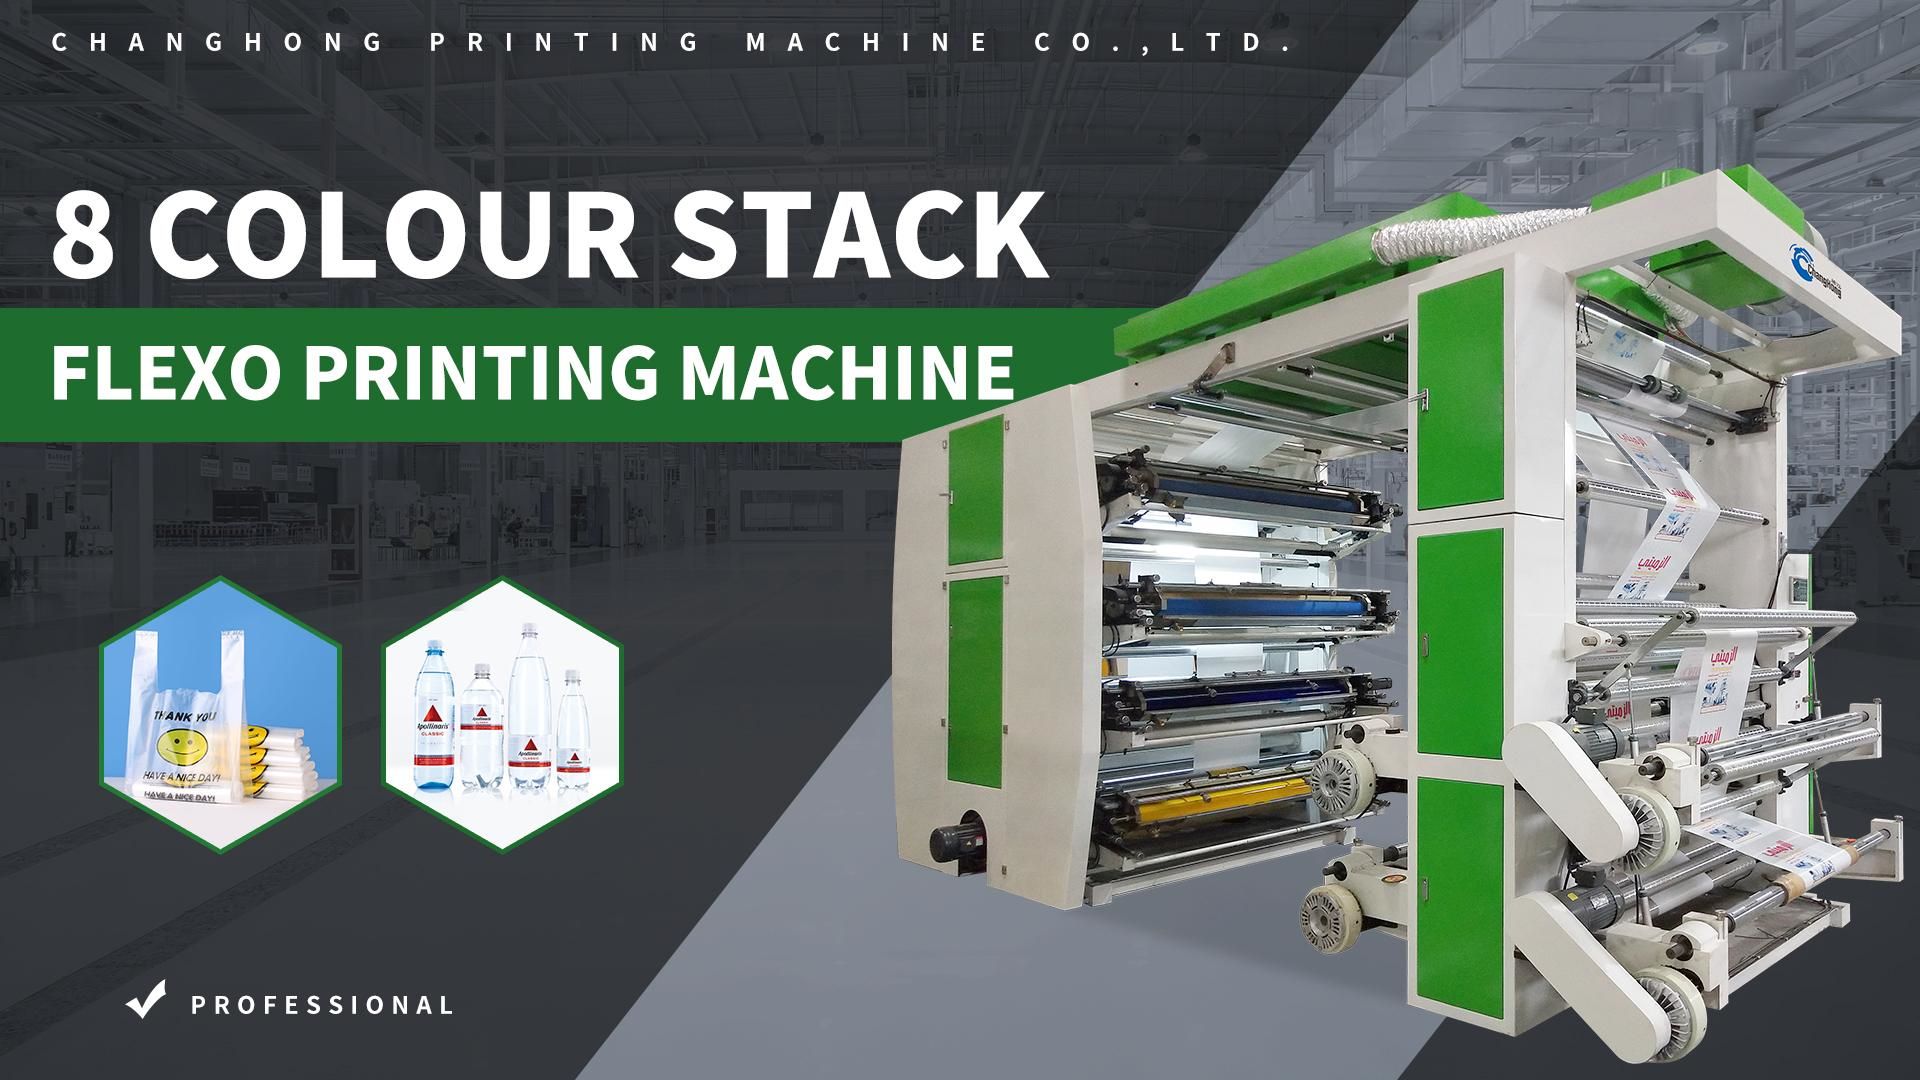 Stack flexo printing machine Introduction